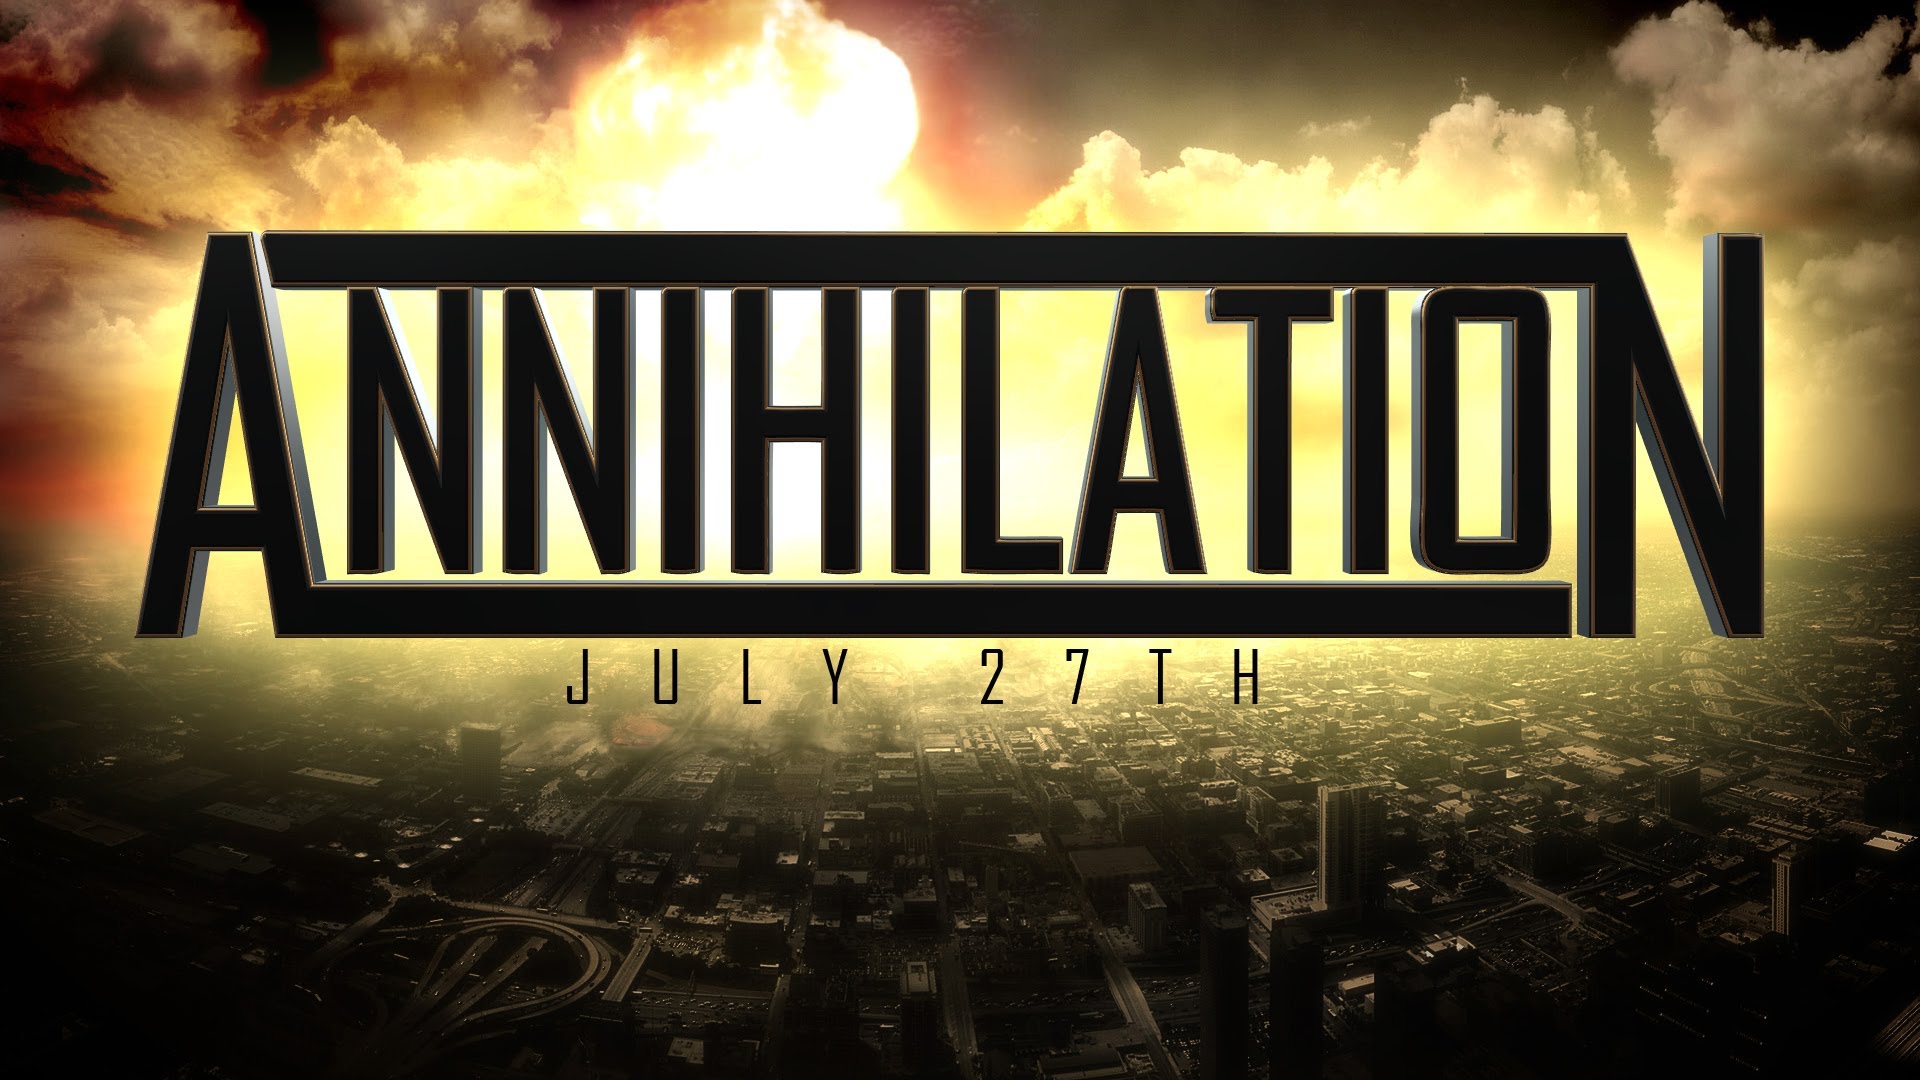 total annihilation hd